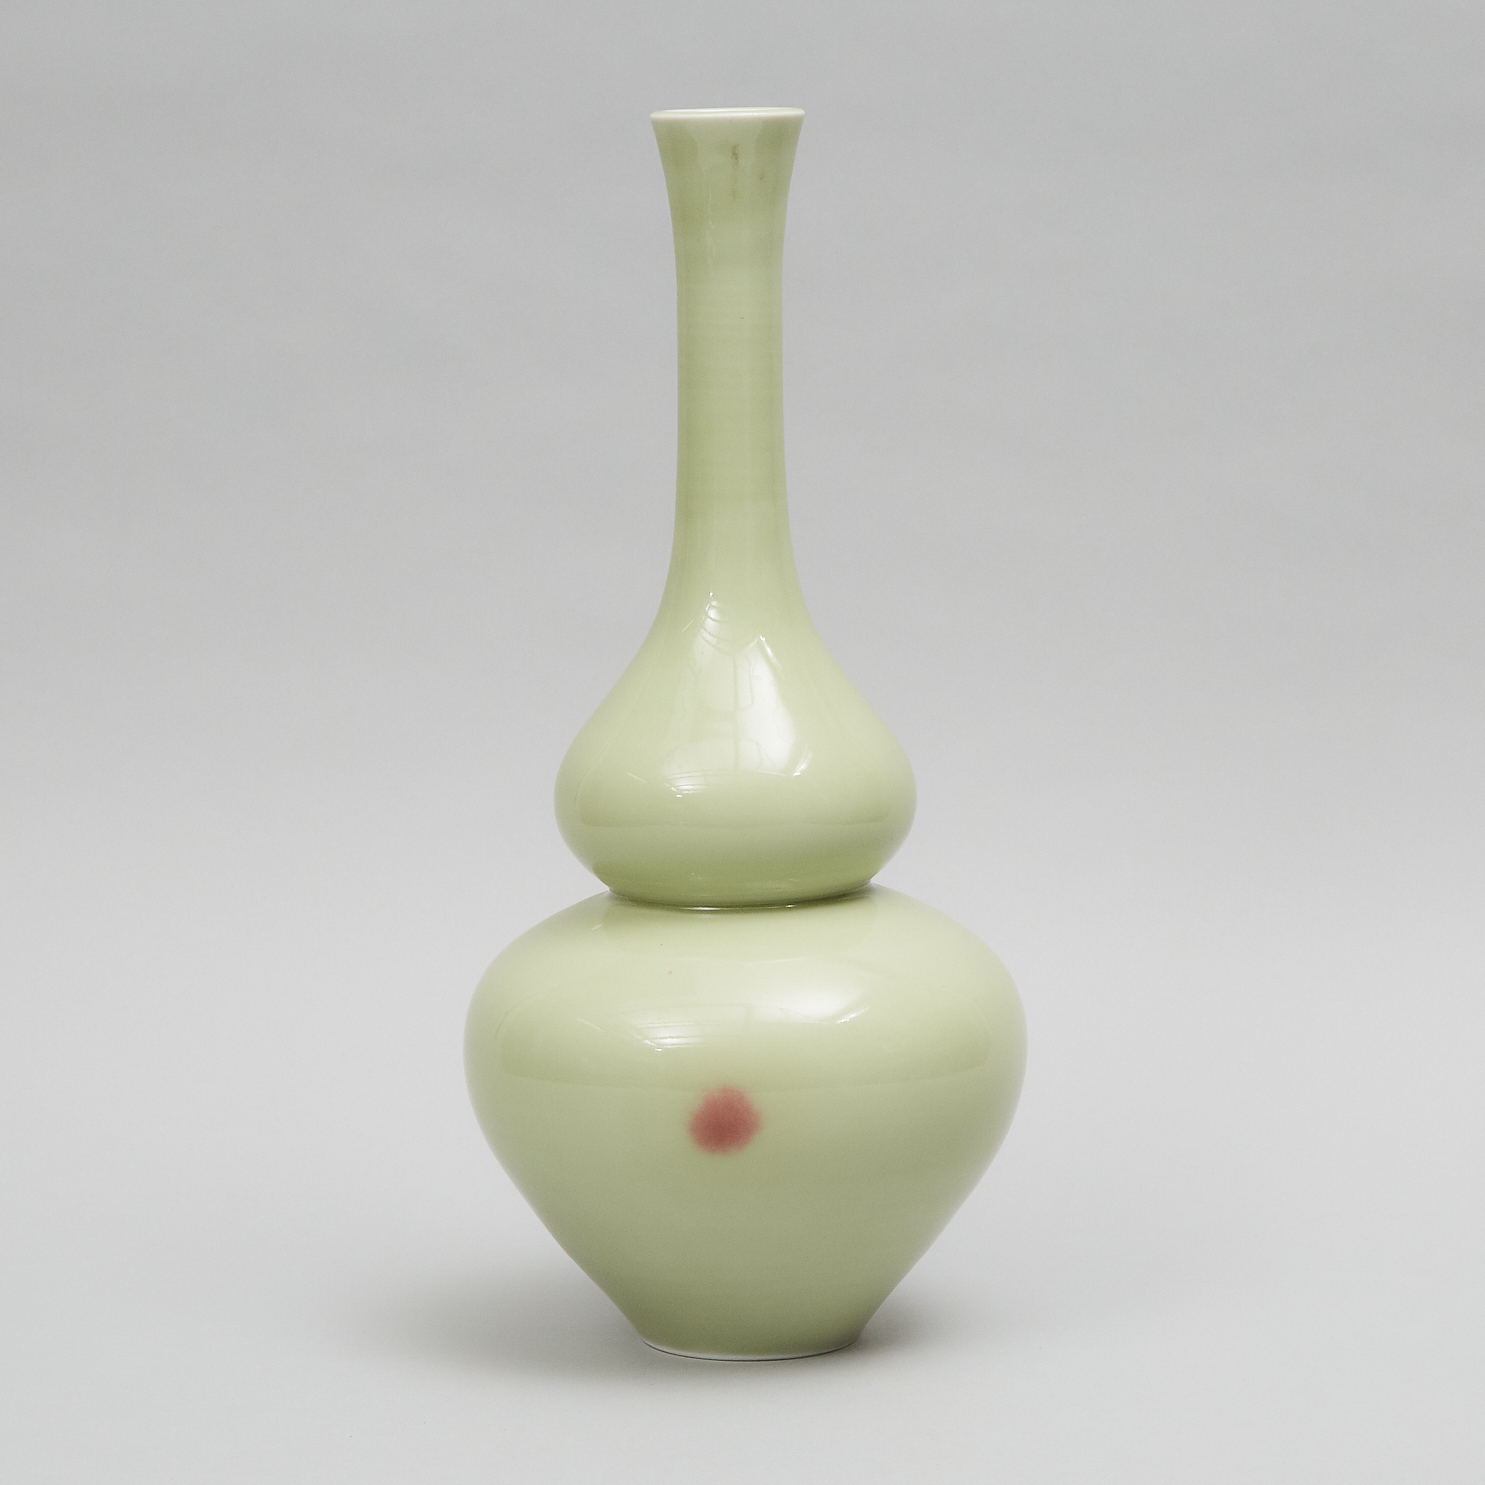 Harlan House (Canadian, b.1943), Celadon Glazed Double Gourd Vase, 2001